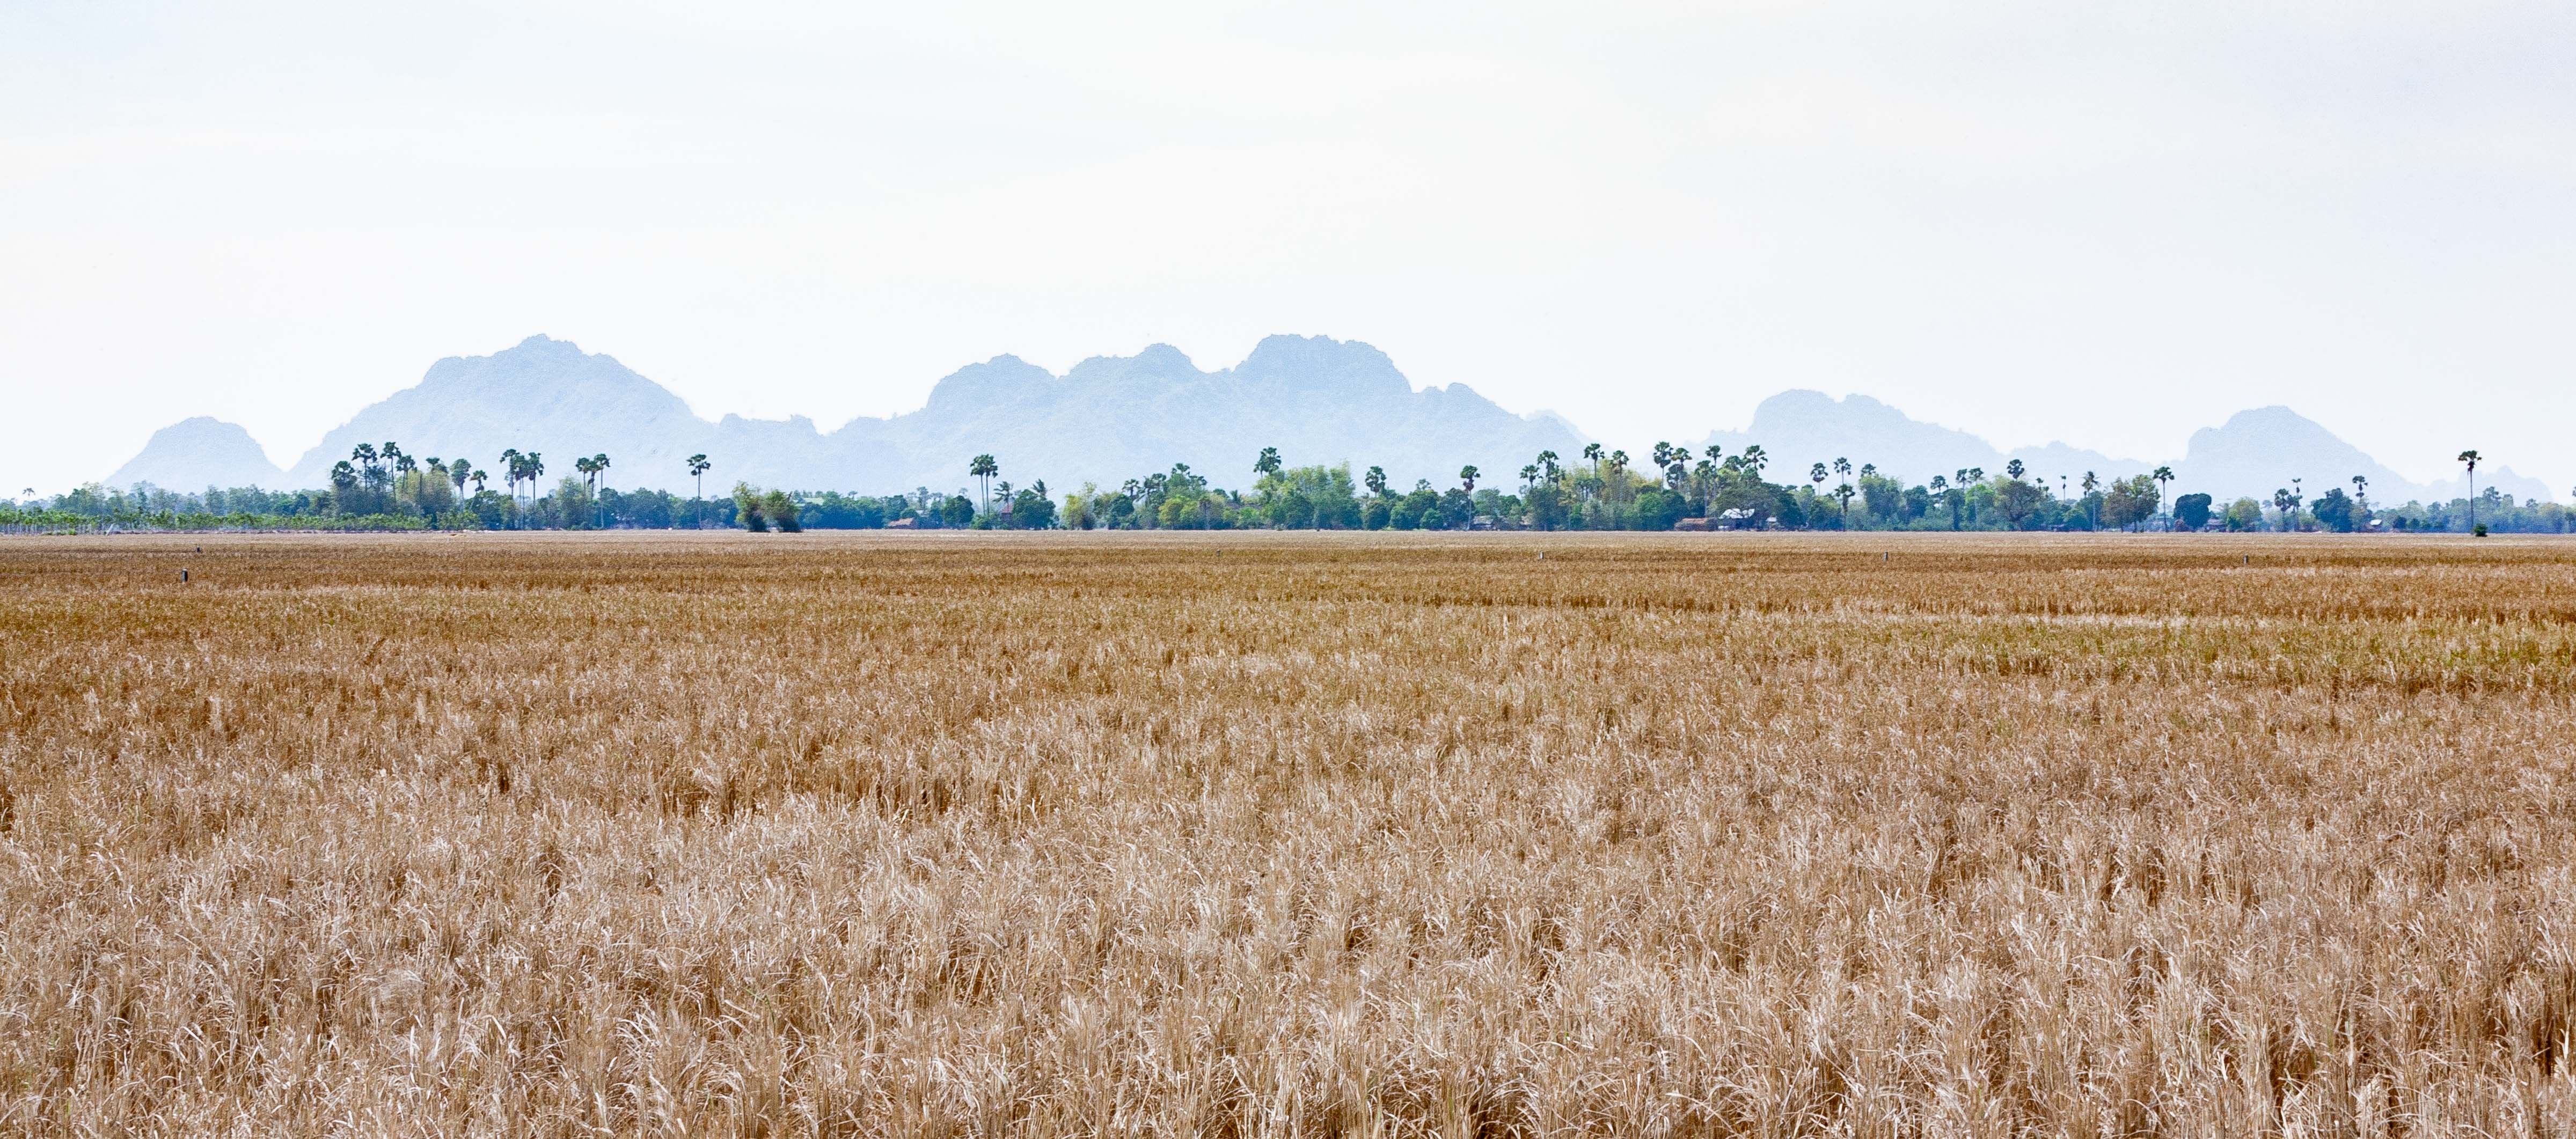 Cambodia, Kampot Prov, Landscape, 2010, IMG 4850